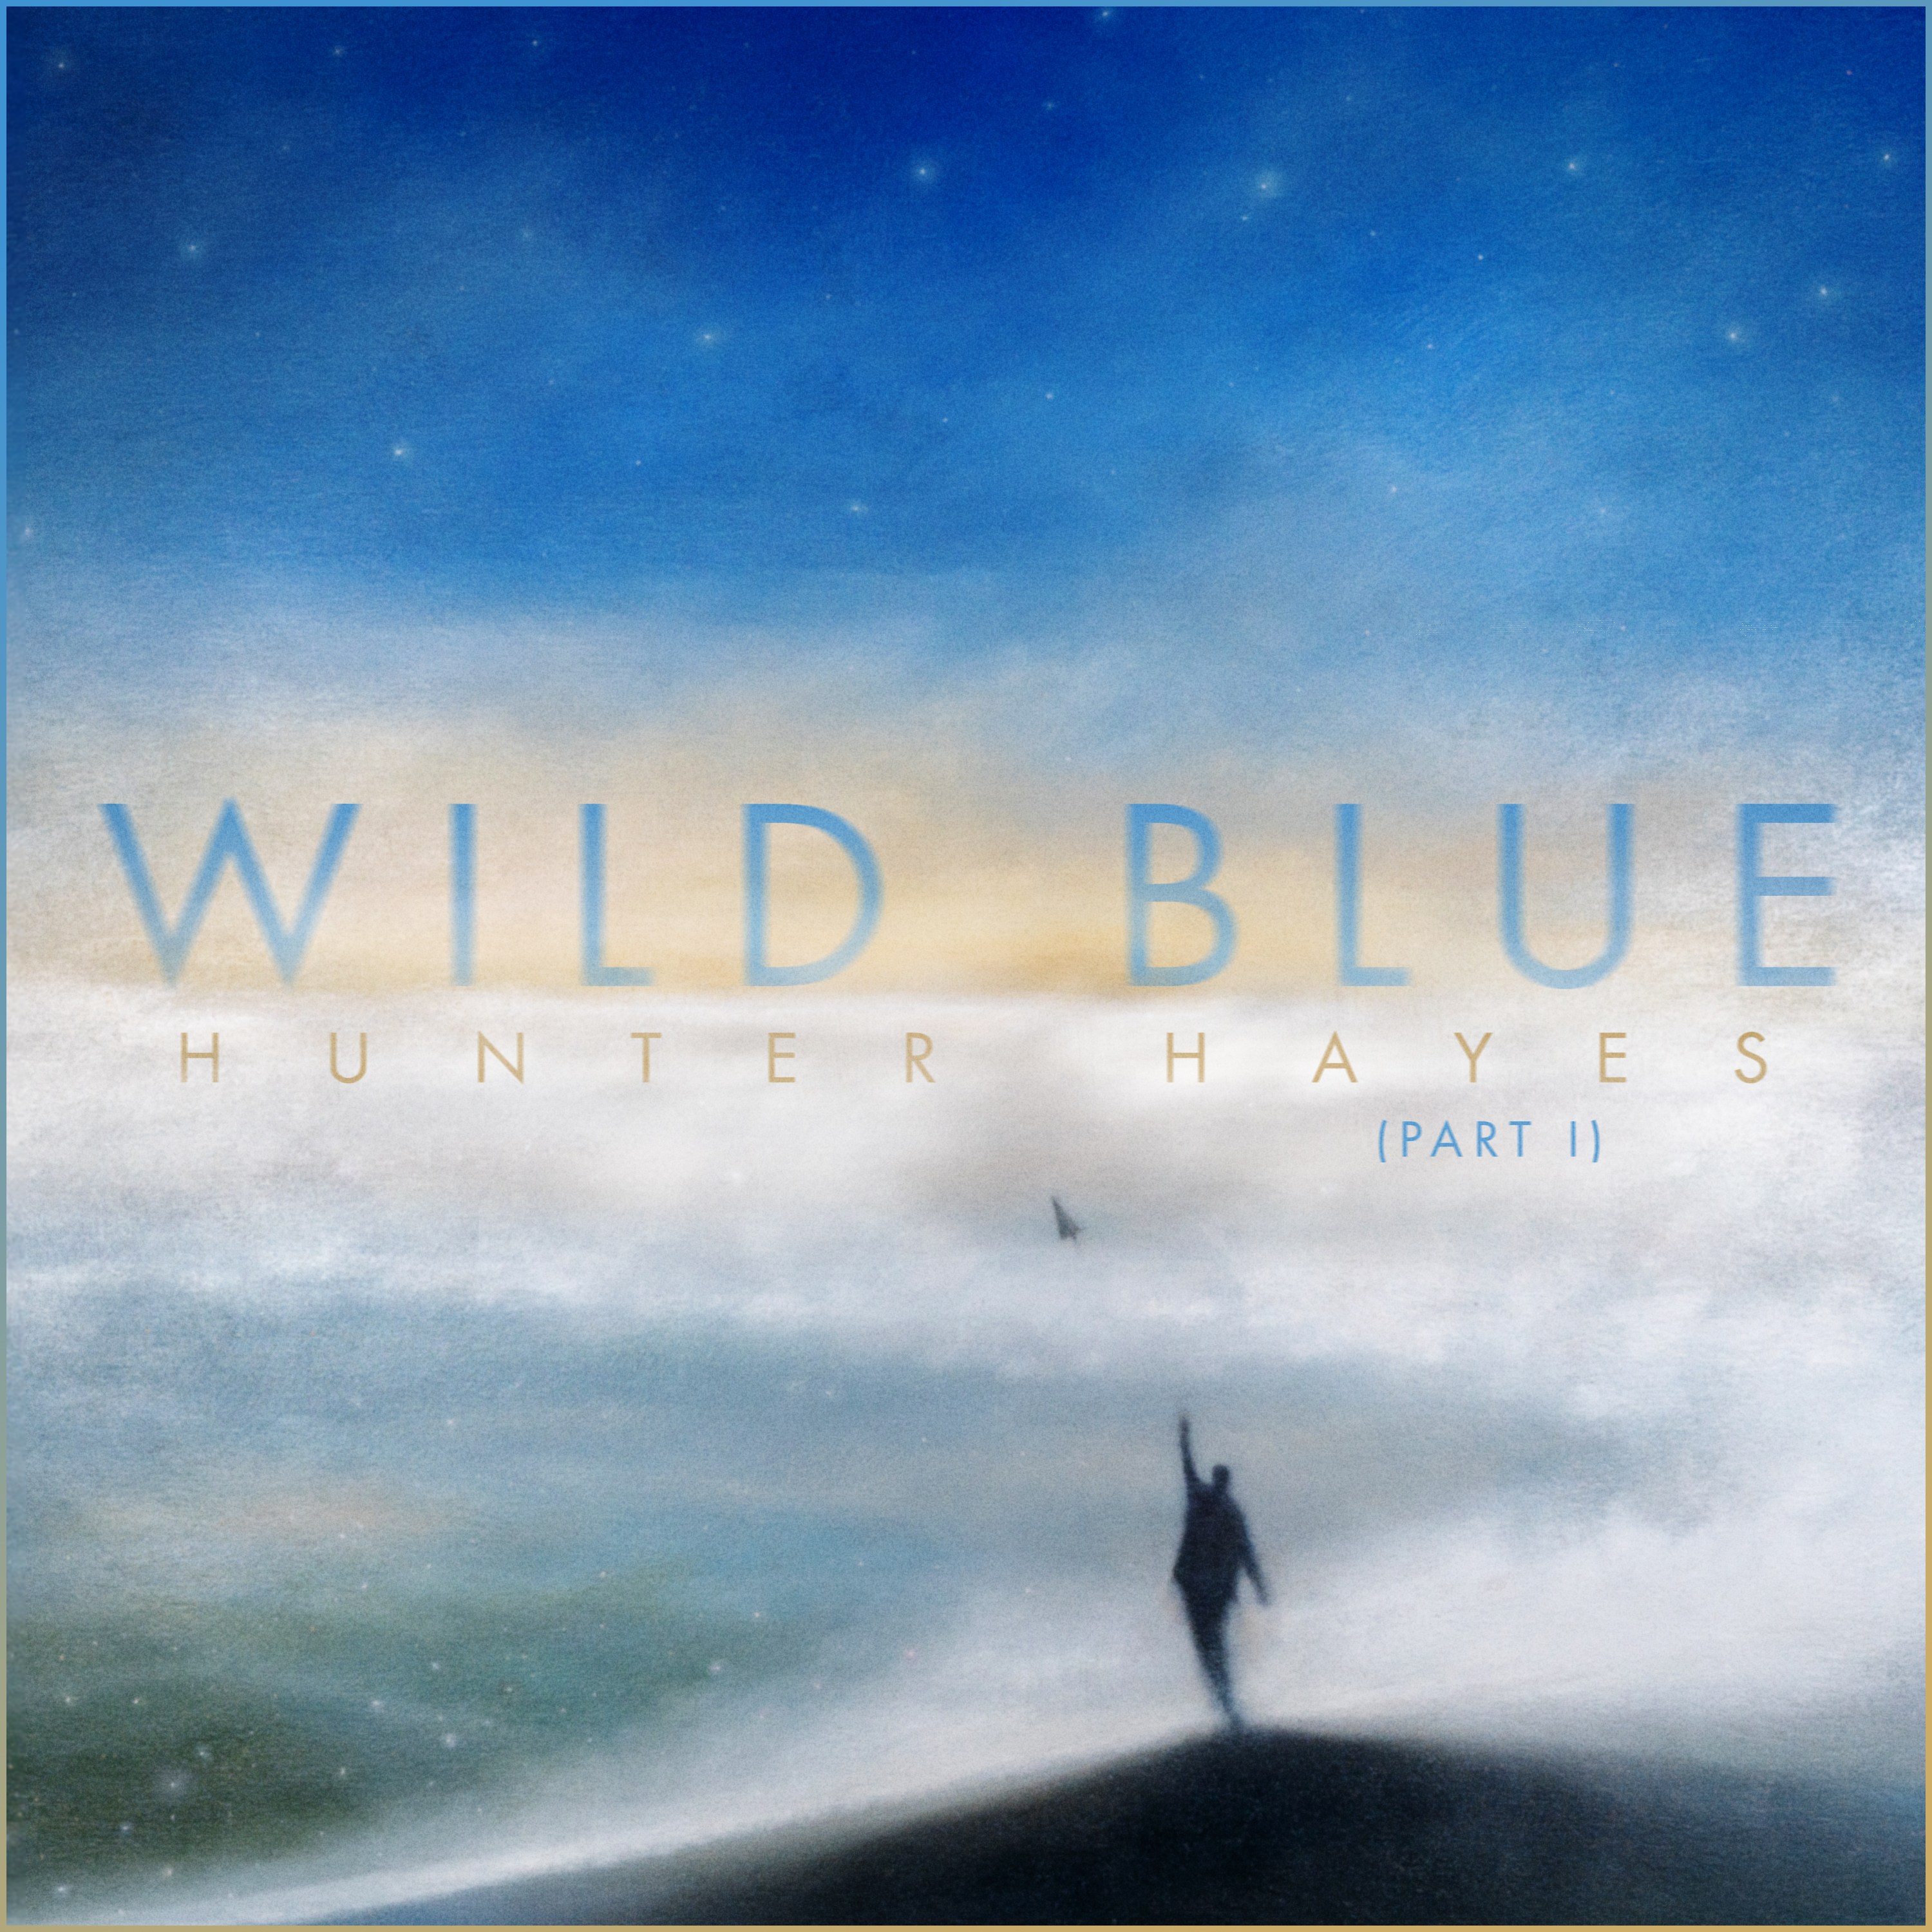 Hunter Hayes' new album, "Wild Blue, Part I"